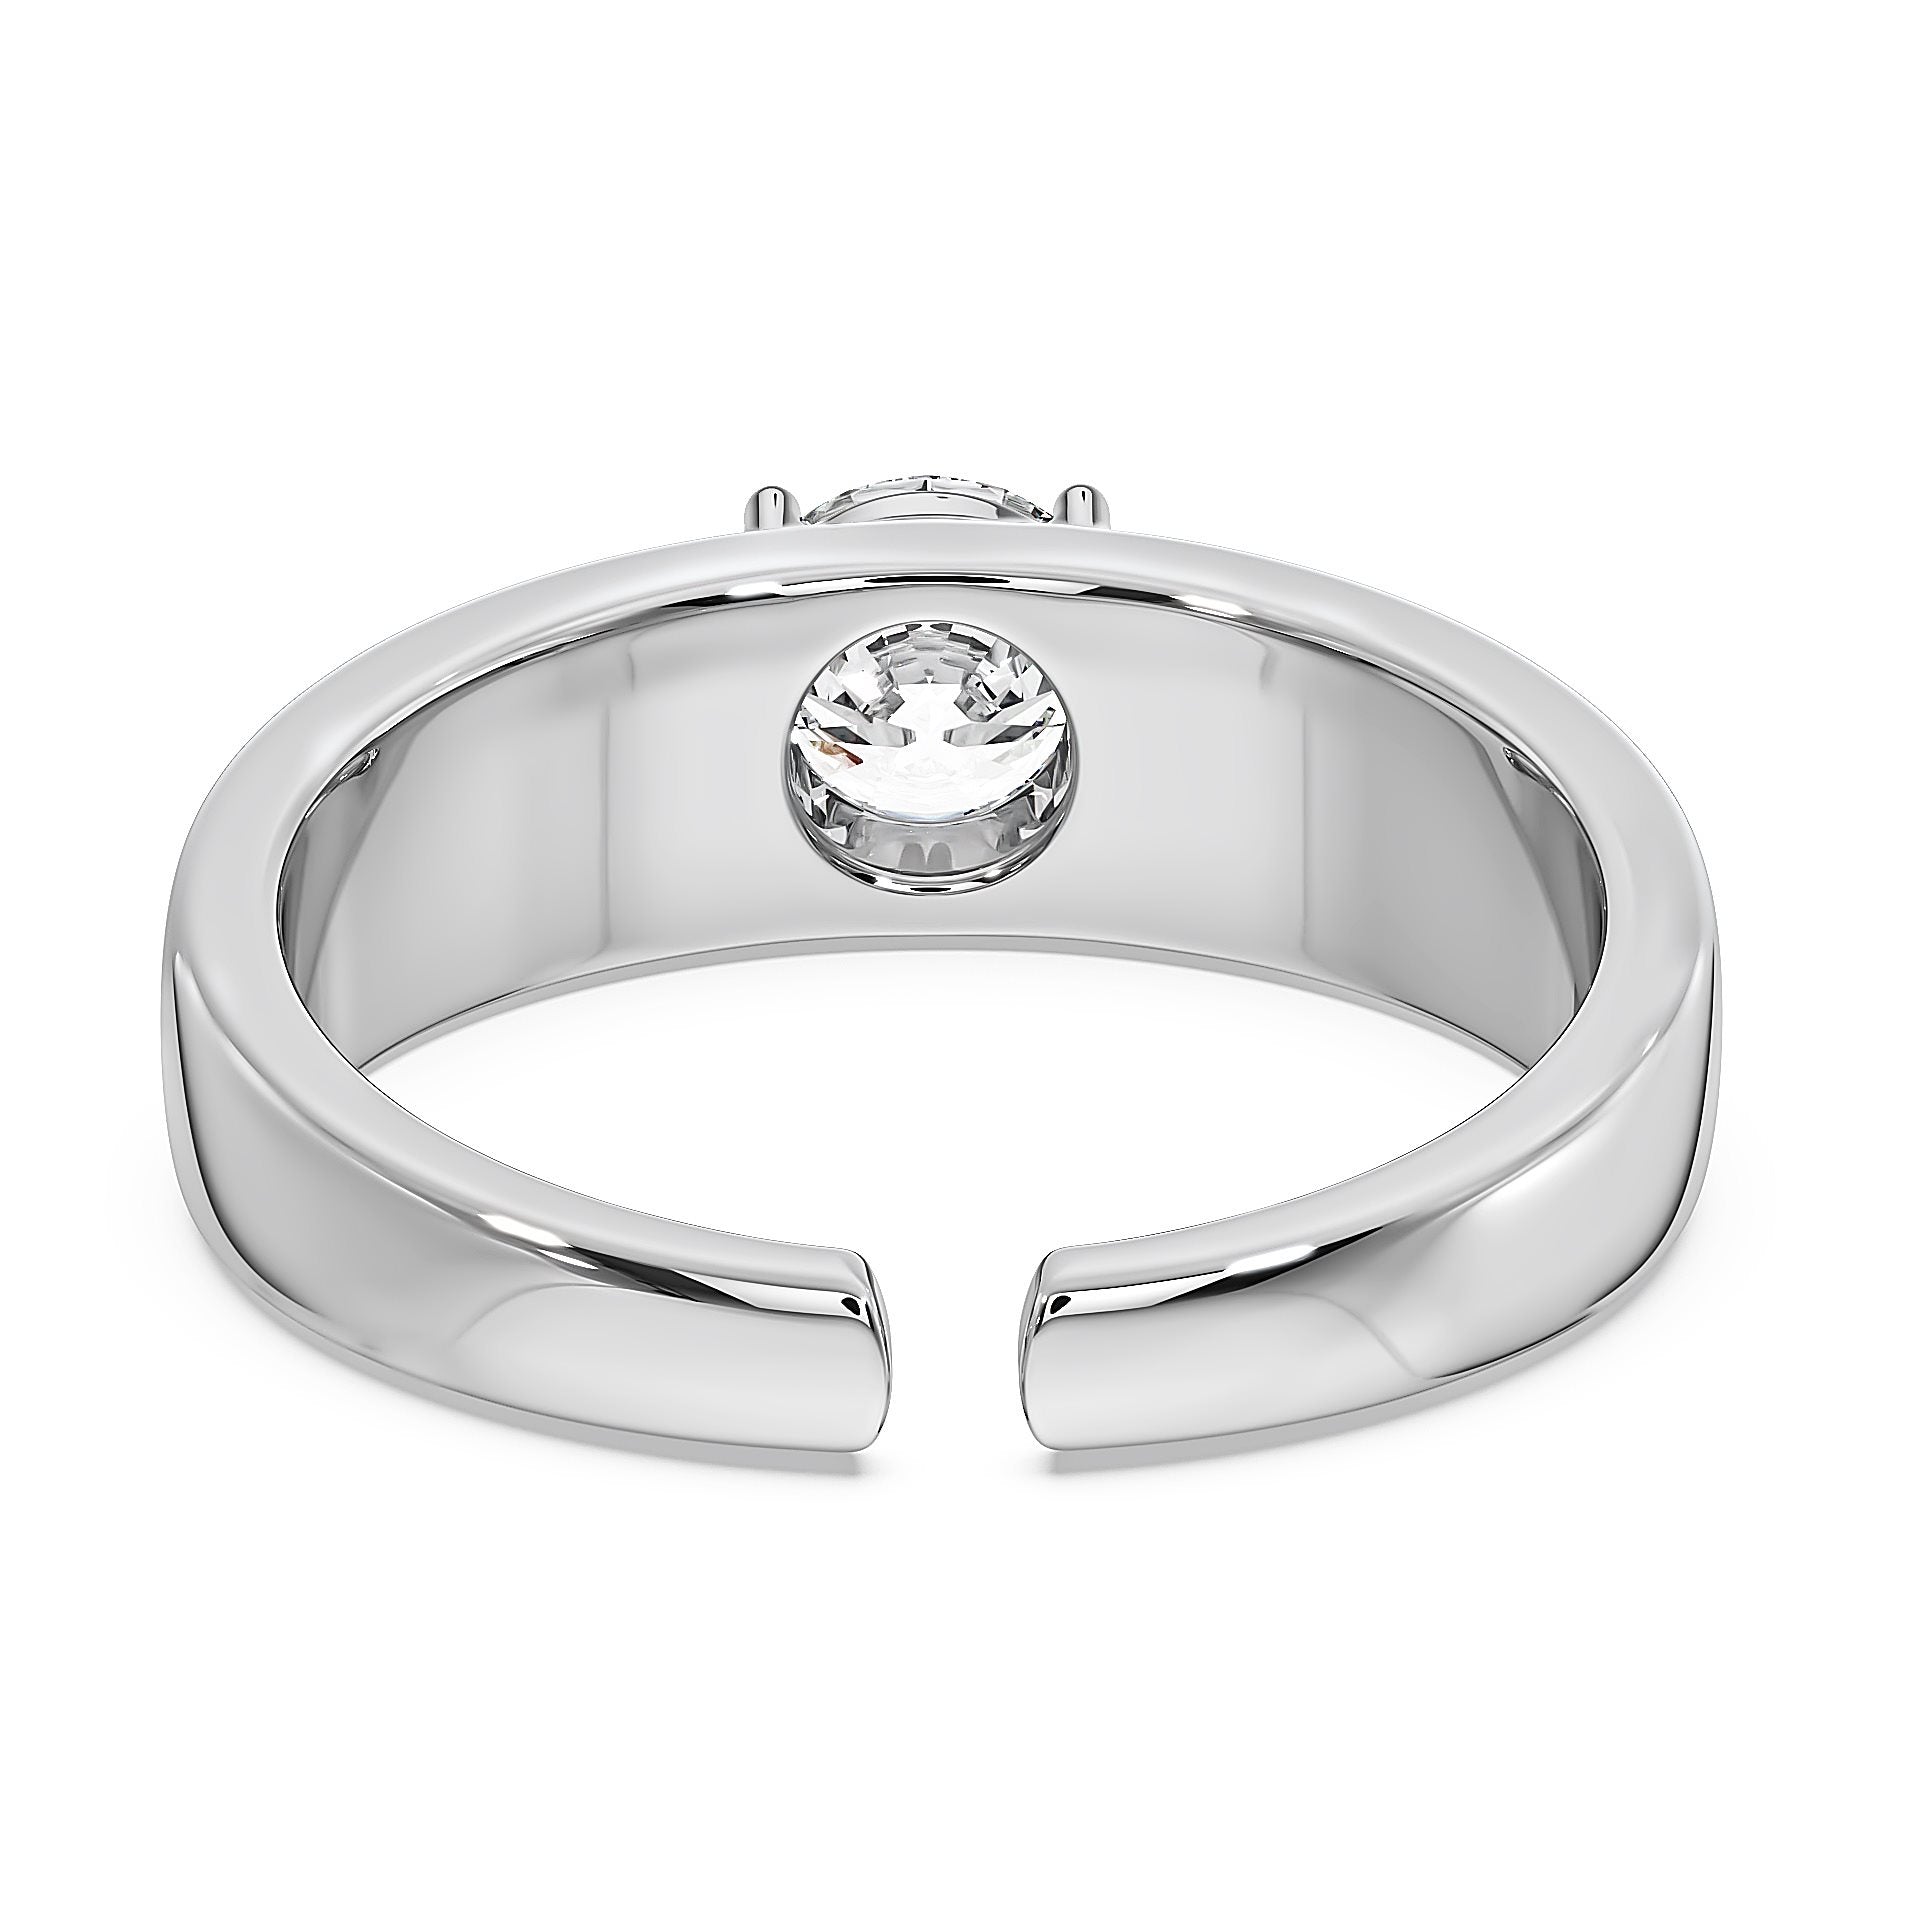 1-Carat MYZA Sterling Silver Men's Ring - MYZA